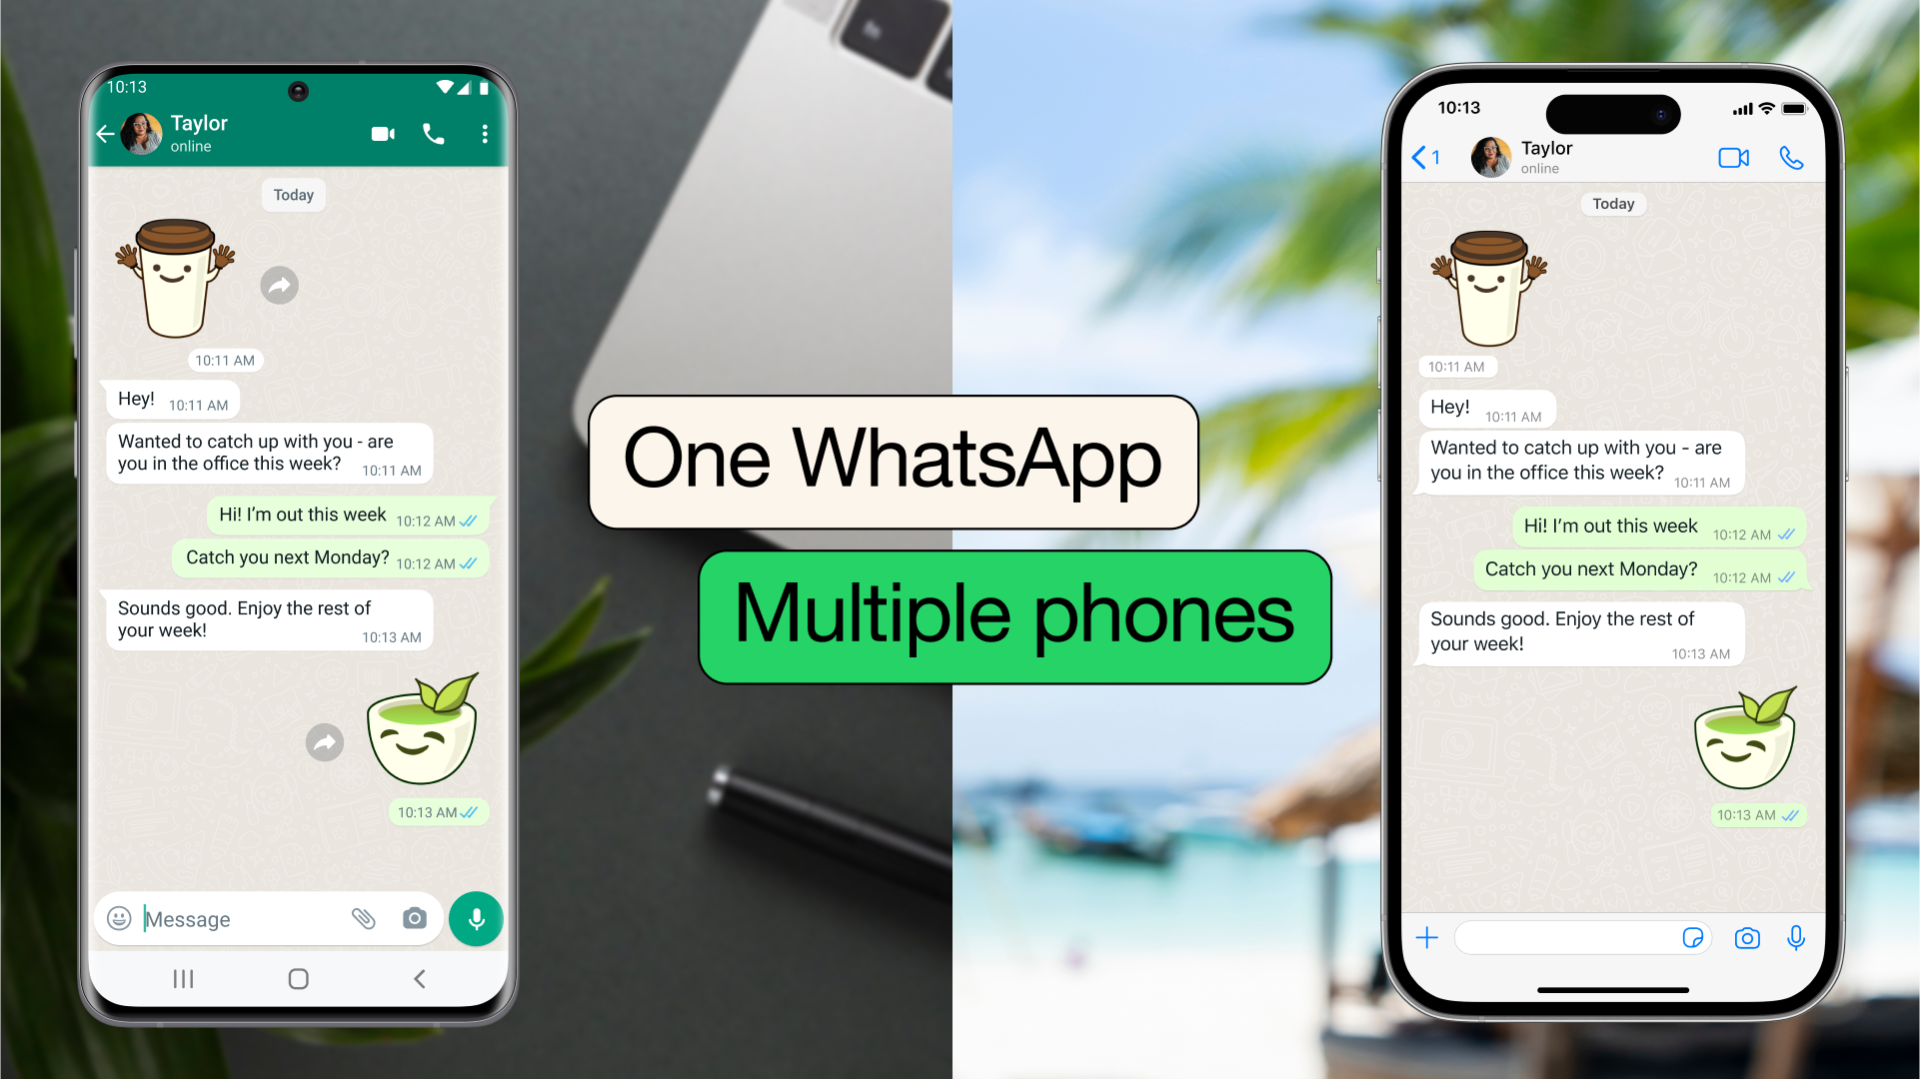 "One WhatsApp - Multiple phones"